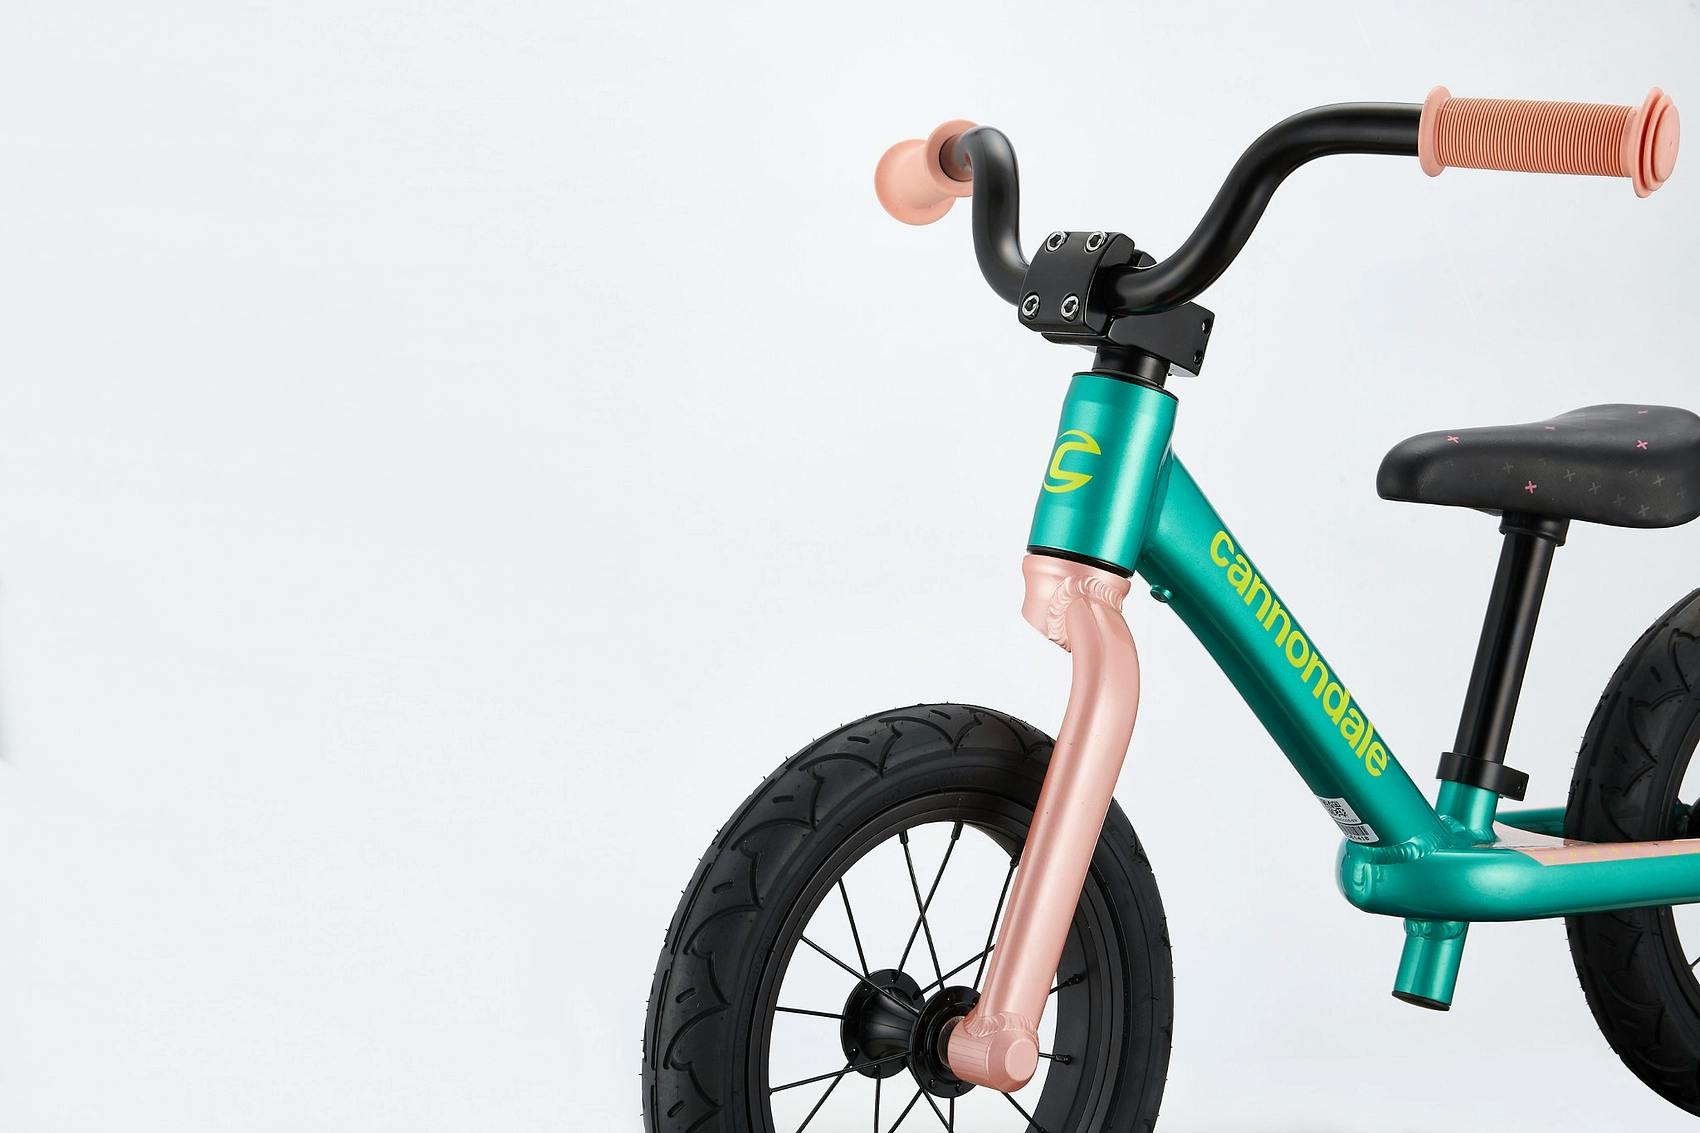 Cannondale Trail Balance Kids Bike · Turquoise · One size